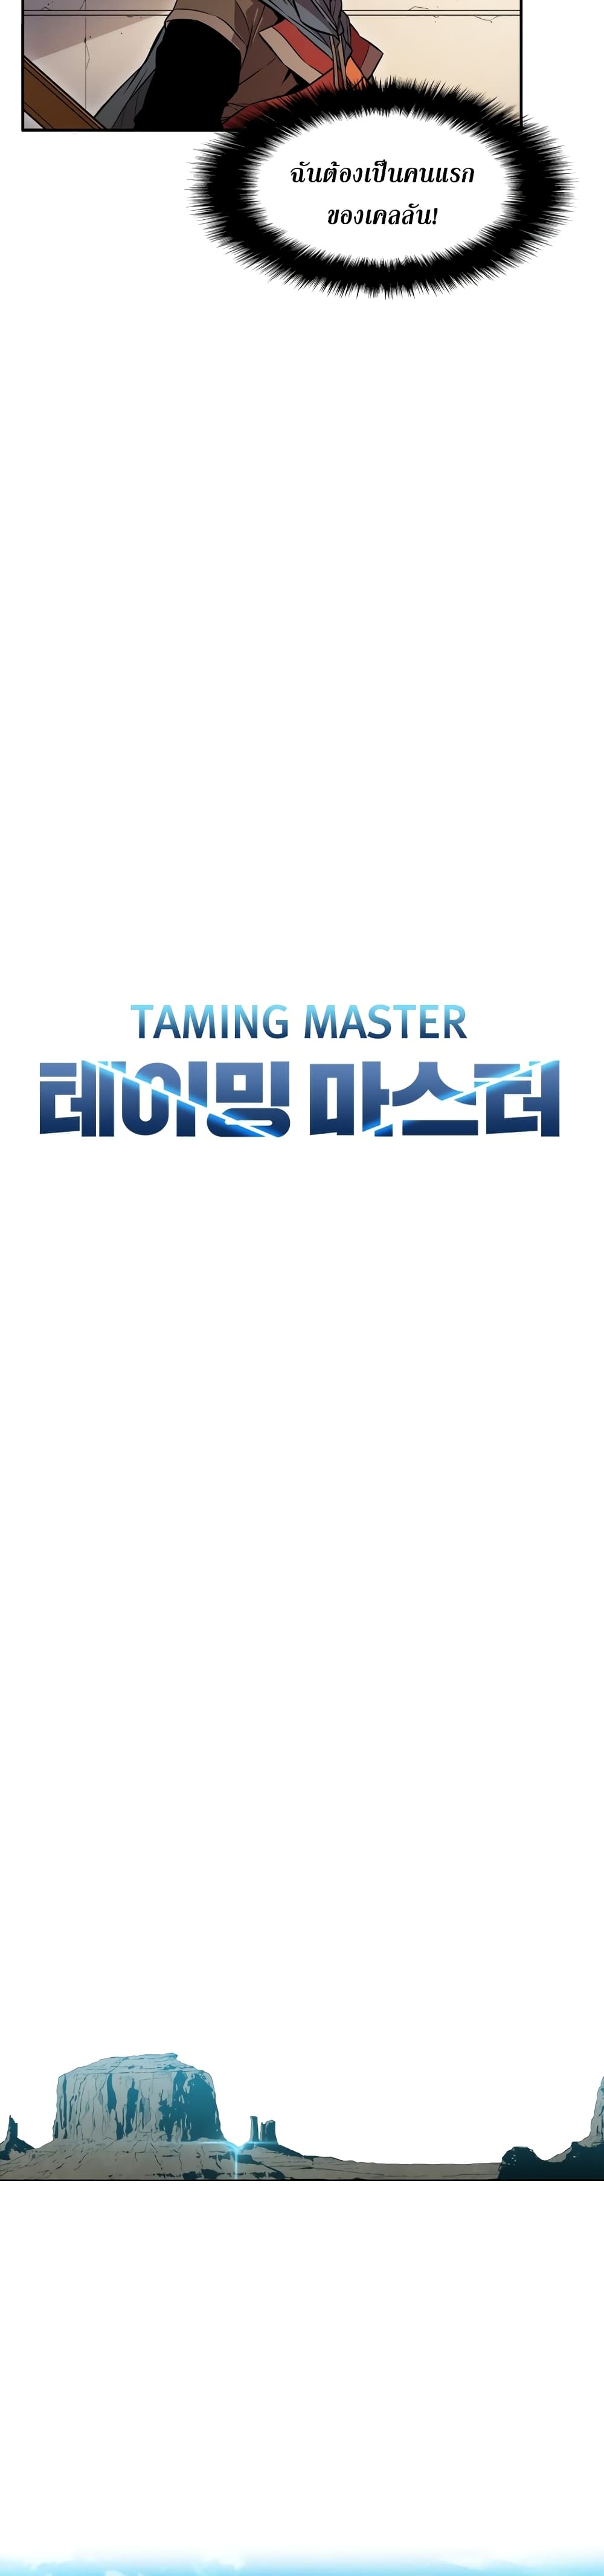 Taming Master3 (5)